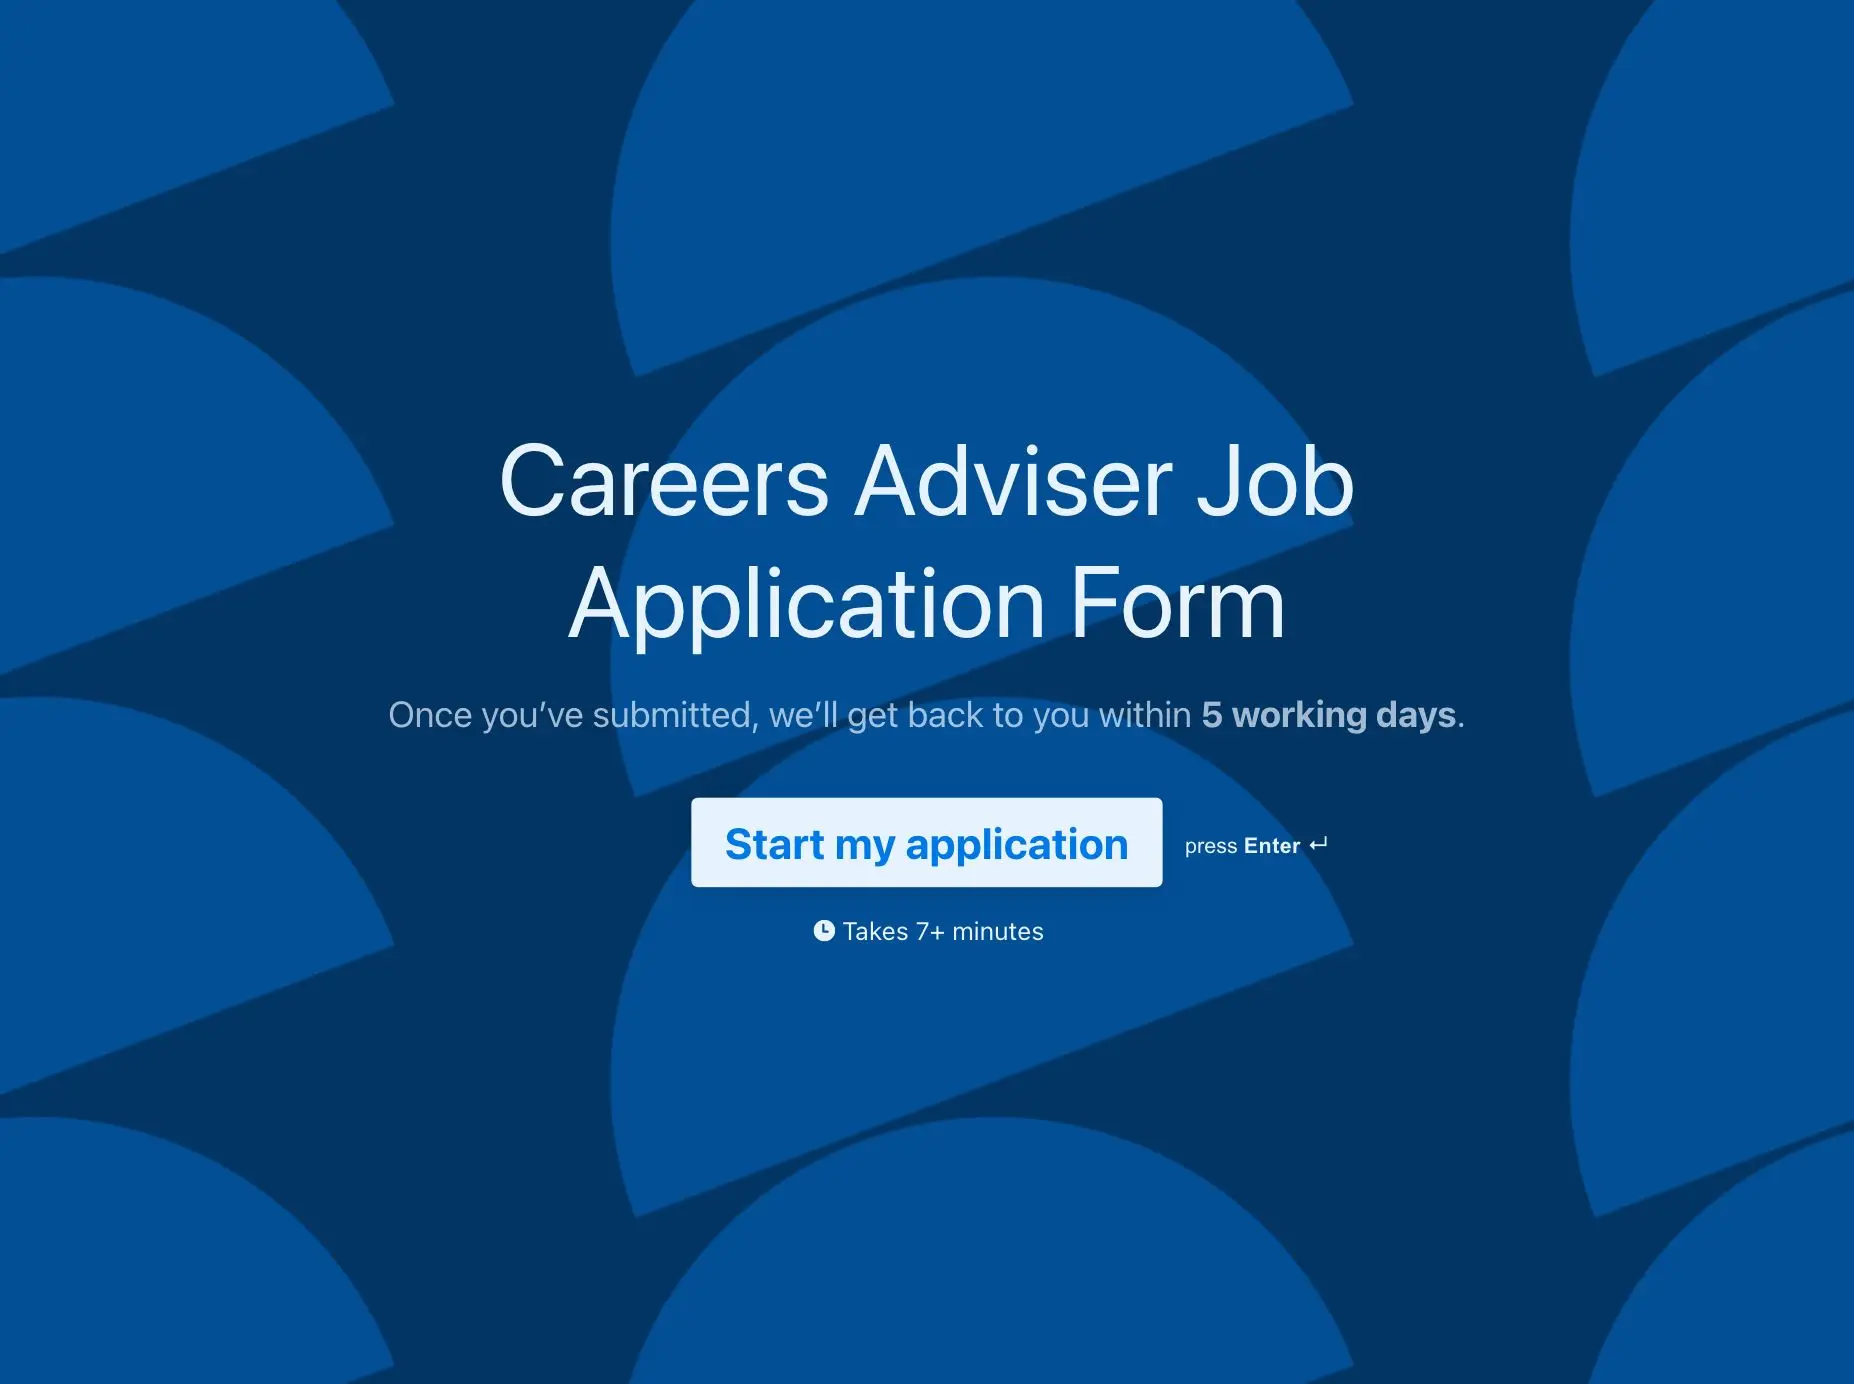 Careers Adviser Job Application Form Template Hero